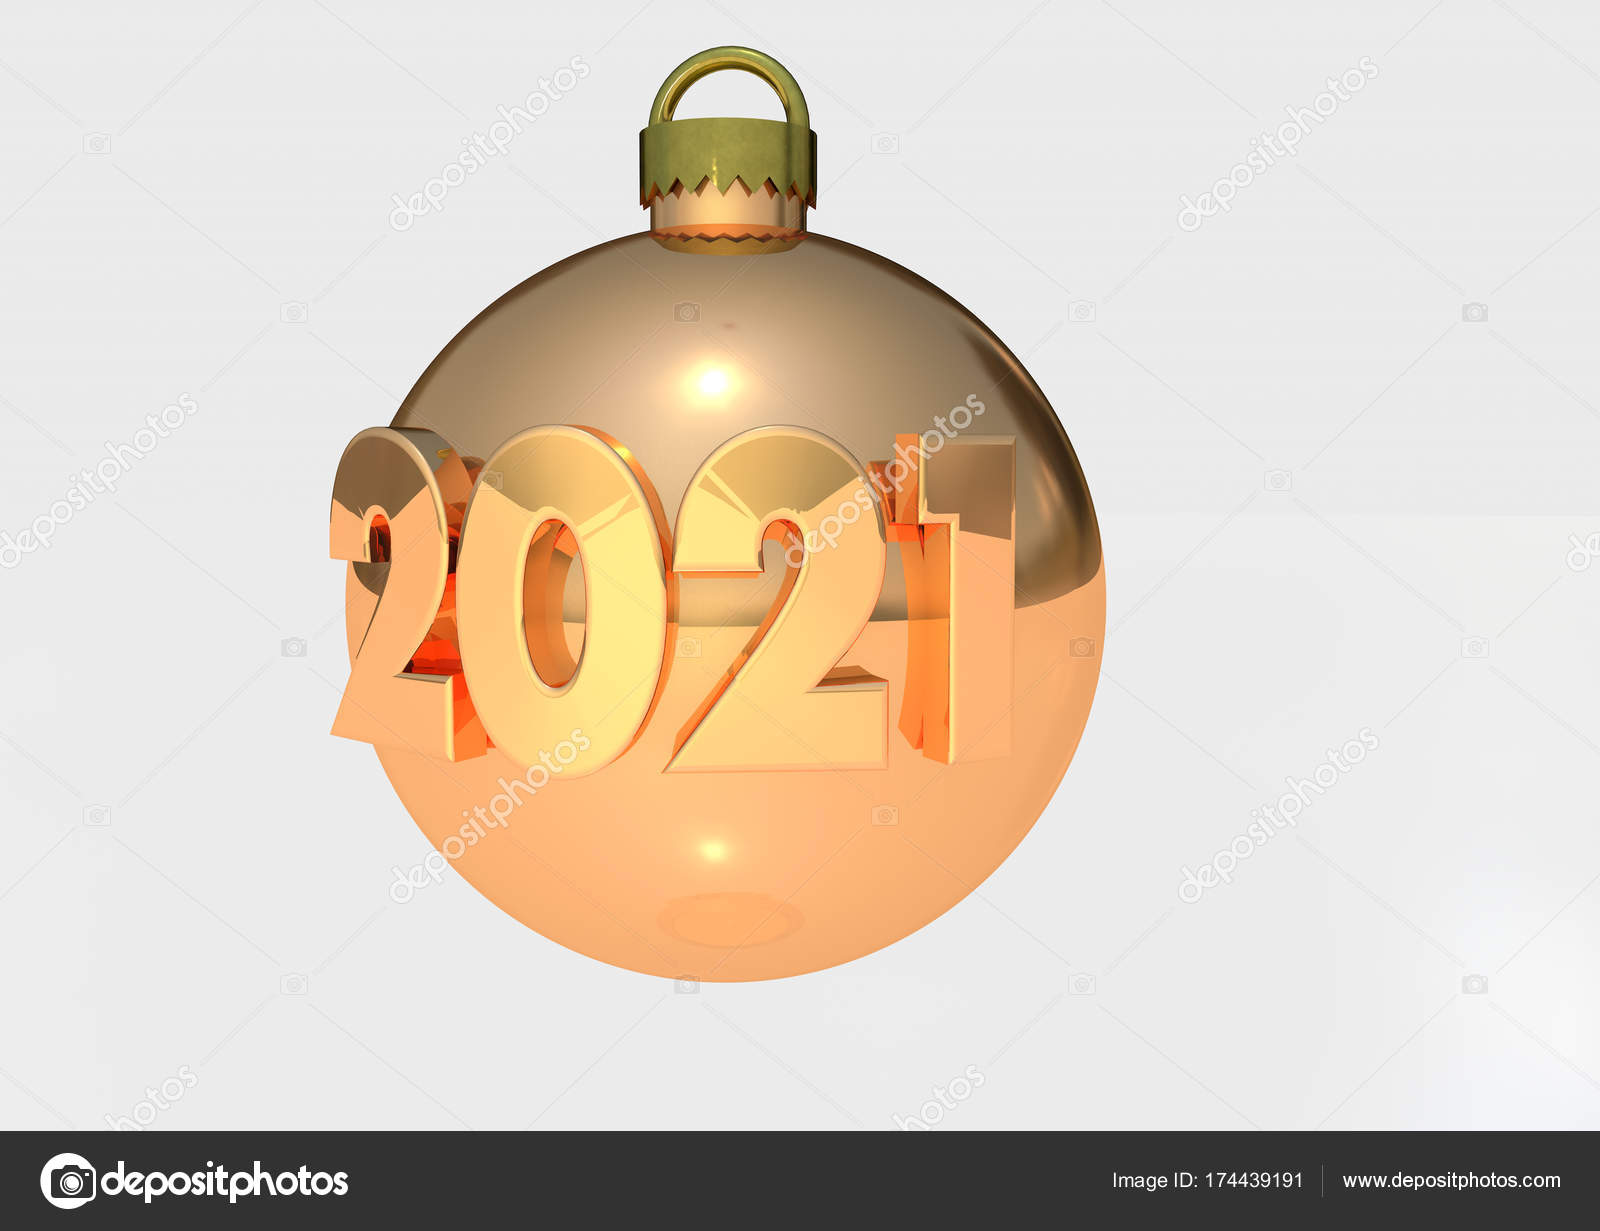 2021 year Stock Photos, Royalty Free 2021 year Images | Depositphotos